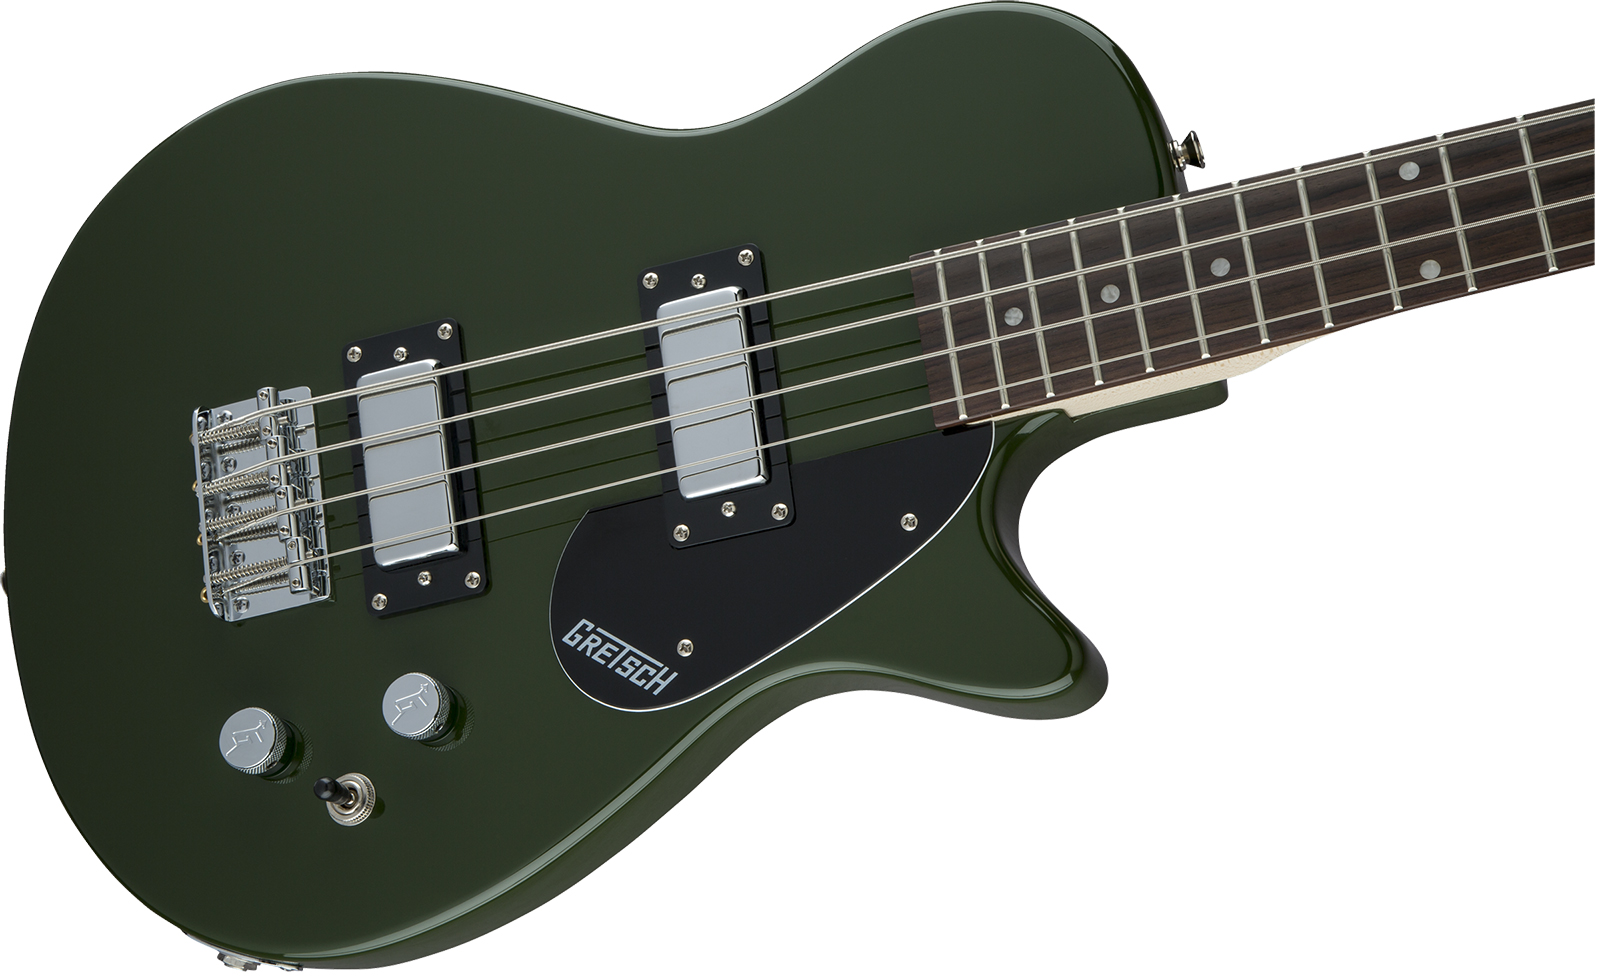 Gretsch G2220 Junior Jet Bass Ii Short Scale Electromatic Wal - Torino Green - Basse Électrique Enfants - Variation 2